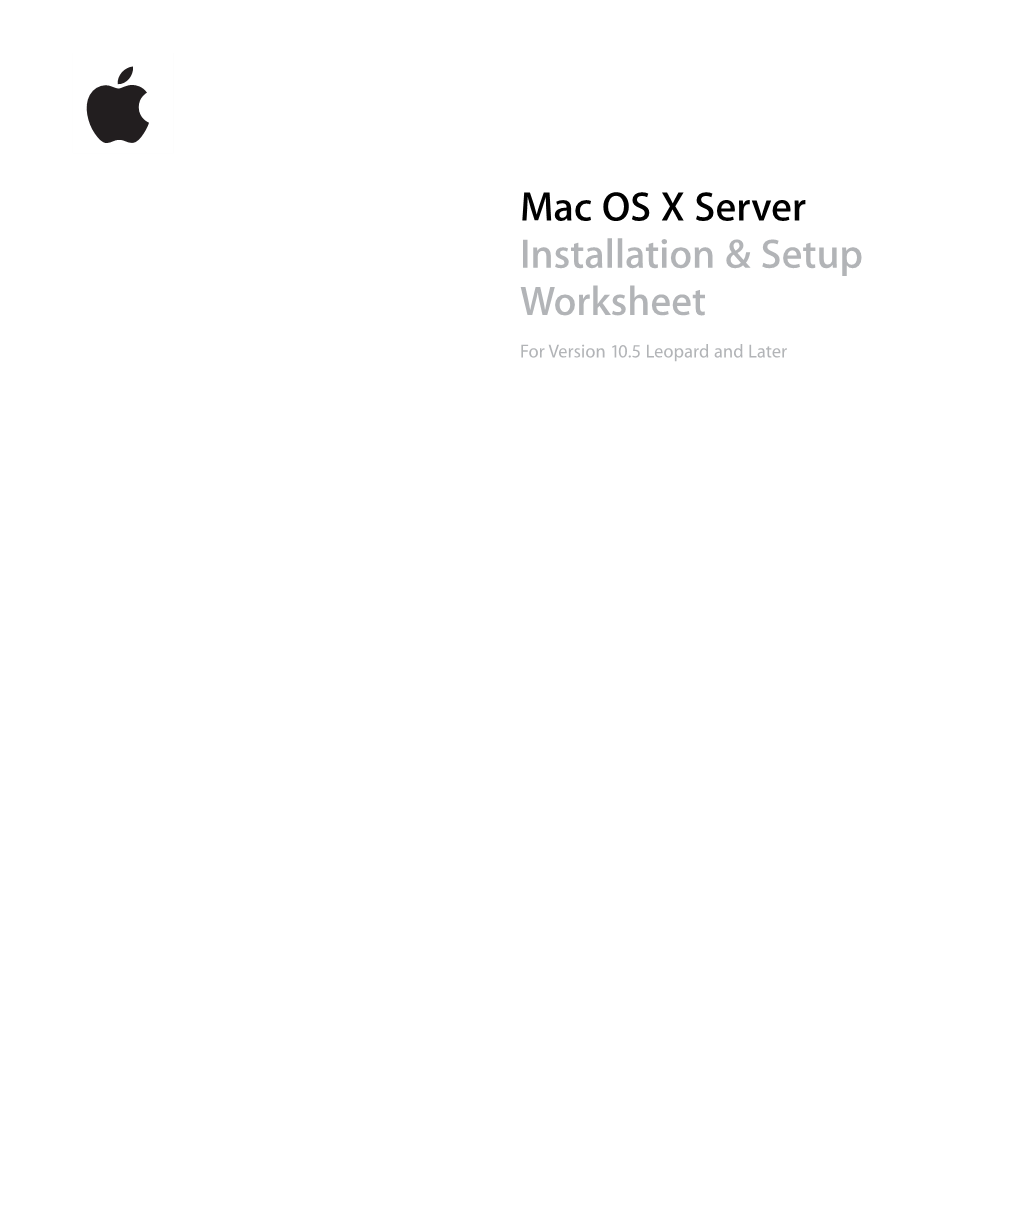 Mac OS X Server Installation & Setup Worksheet